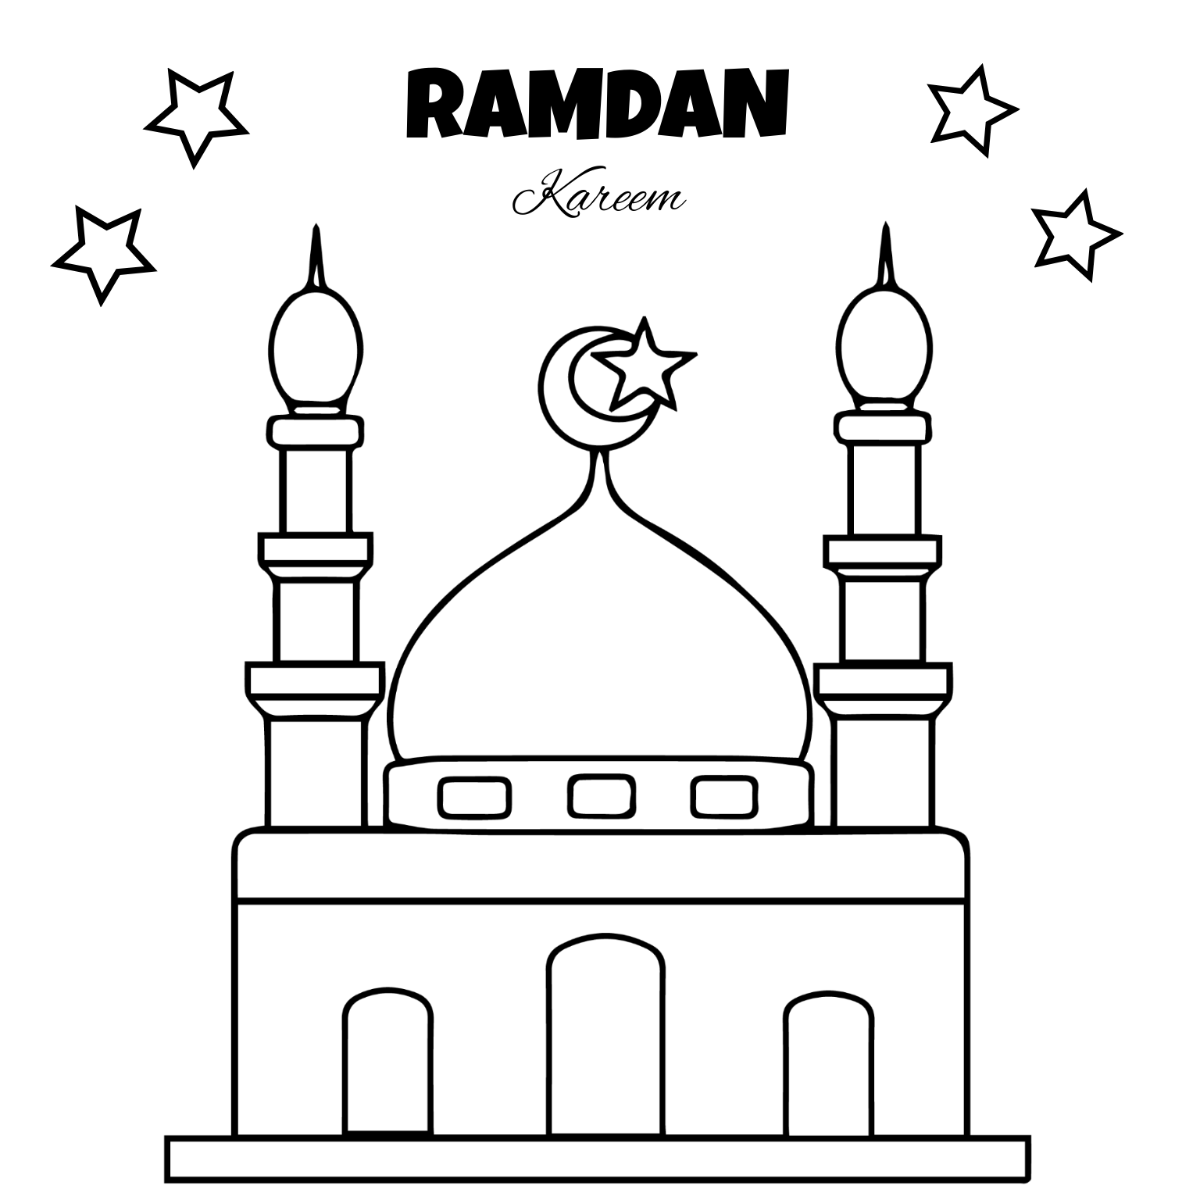 Easy Ramadan Drawing